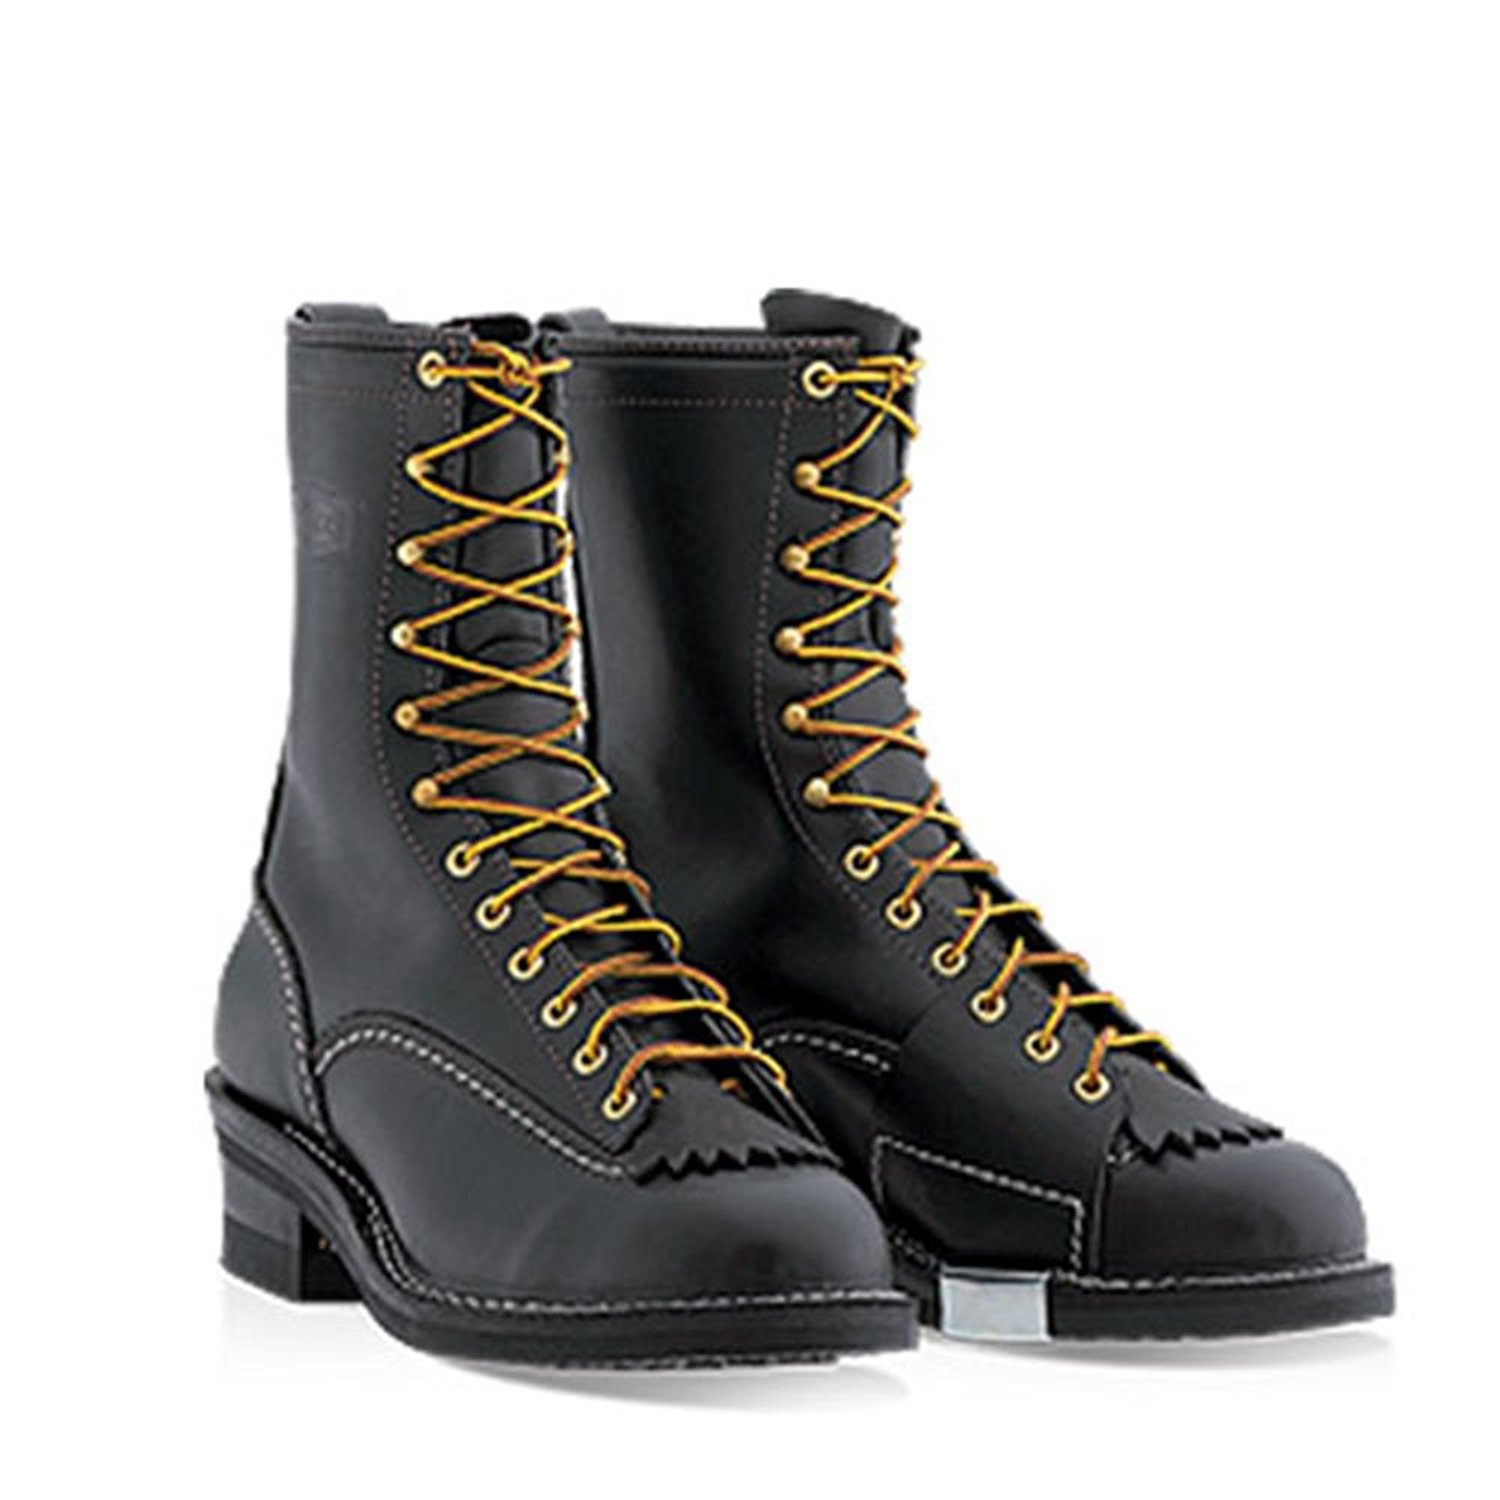 Wesco Lineman Boots